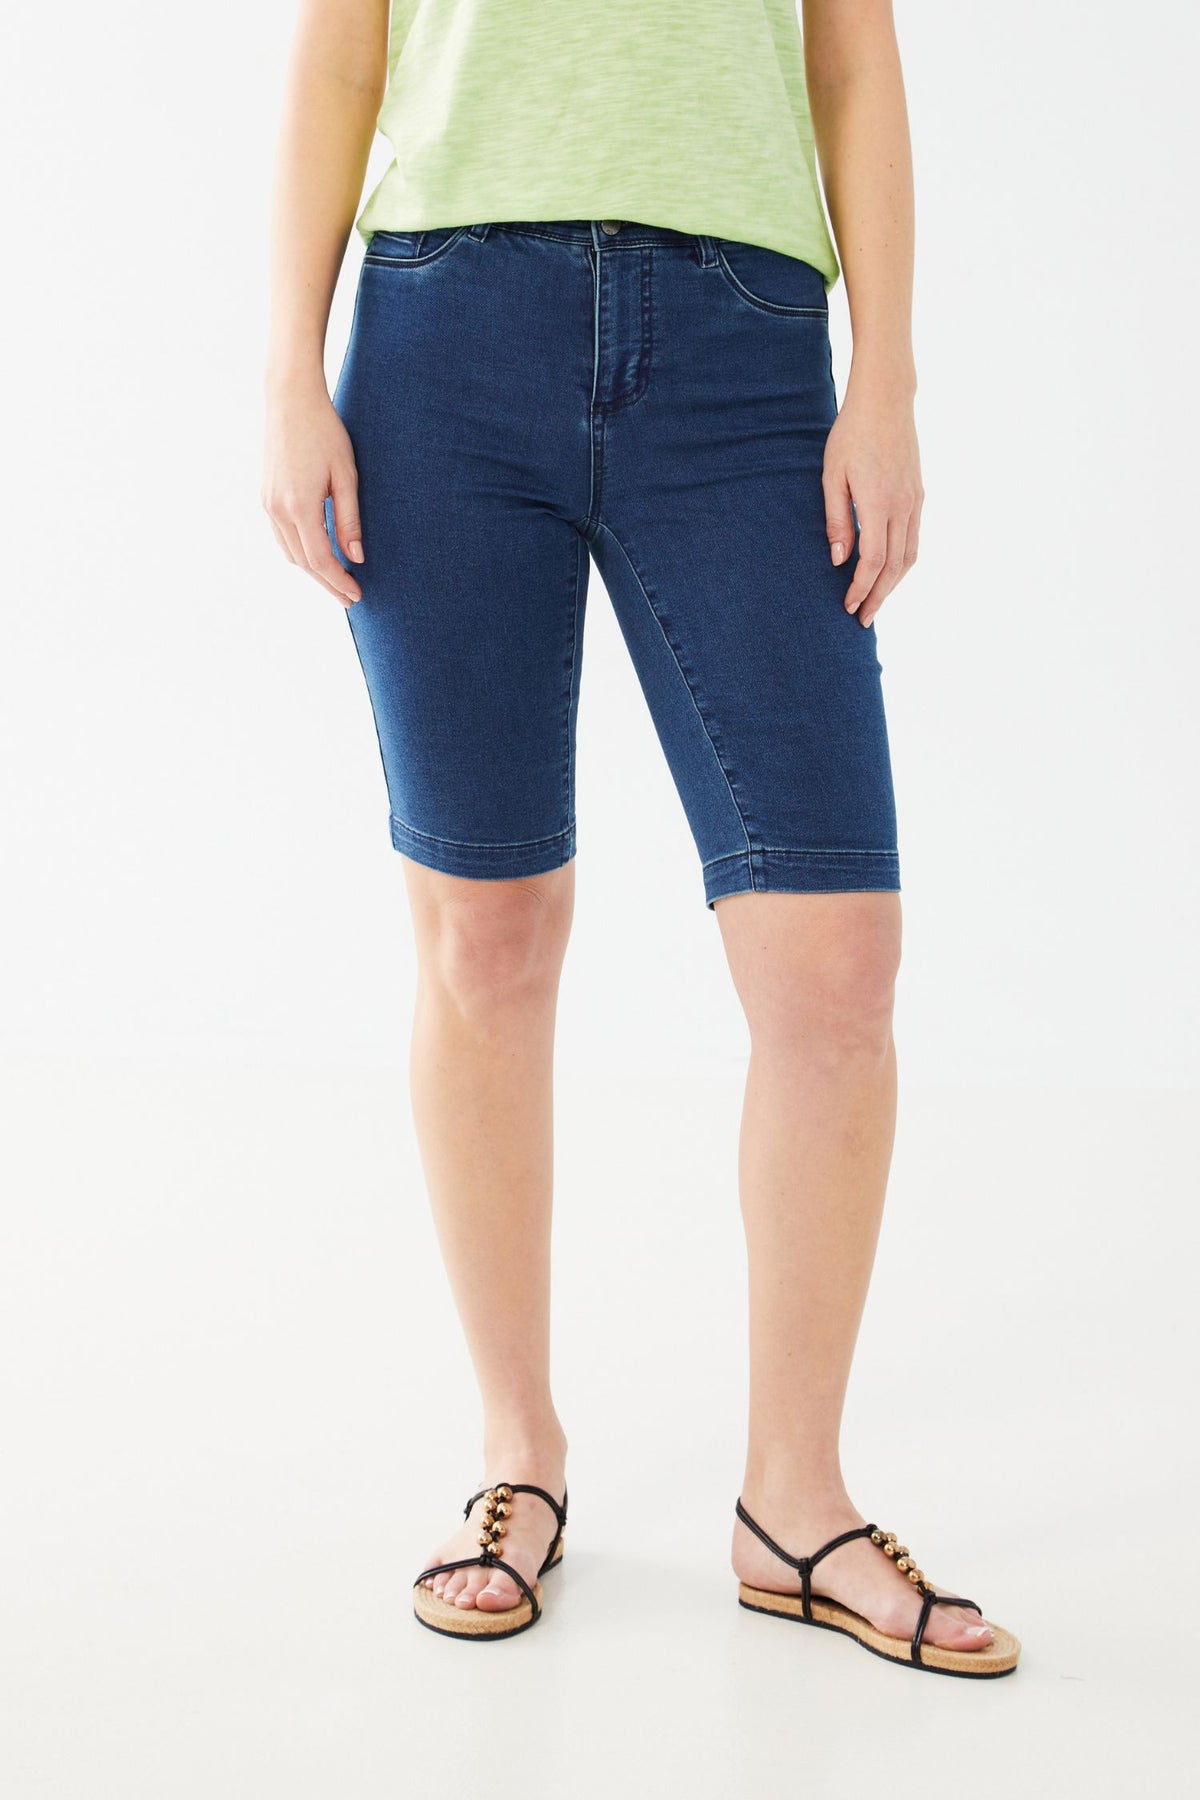 FDJ Olivia Bermuda Shorts - Style 2983711, front